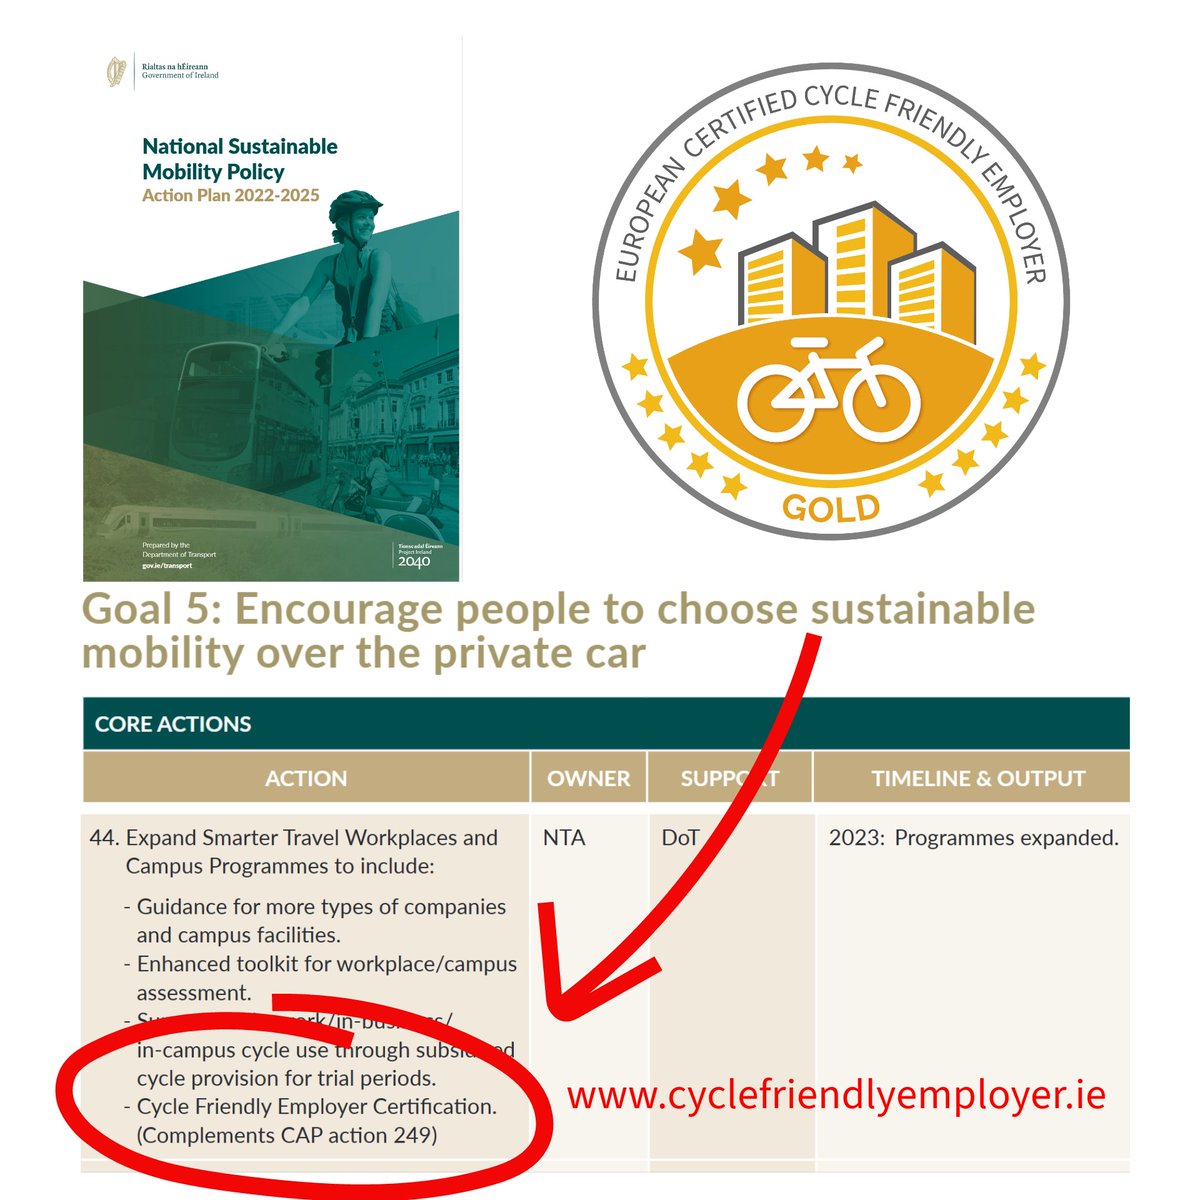 #Ireland #ActiveTravel #LowCarbonPledge #CSRD #ESRS #CyclingIreland #Irelandbusiness